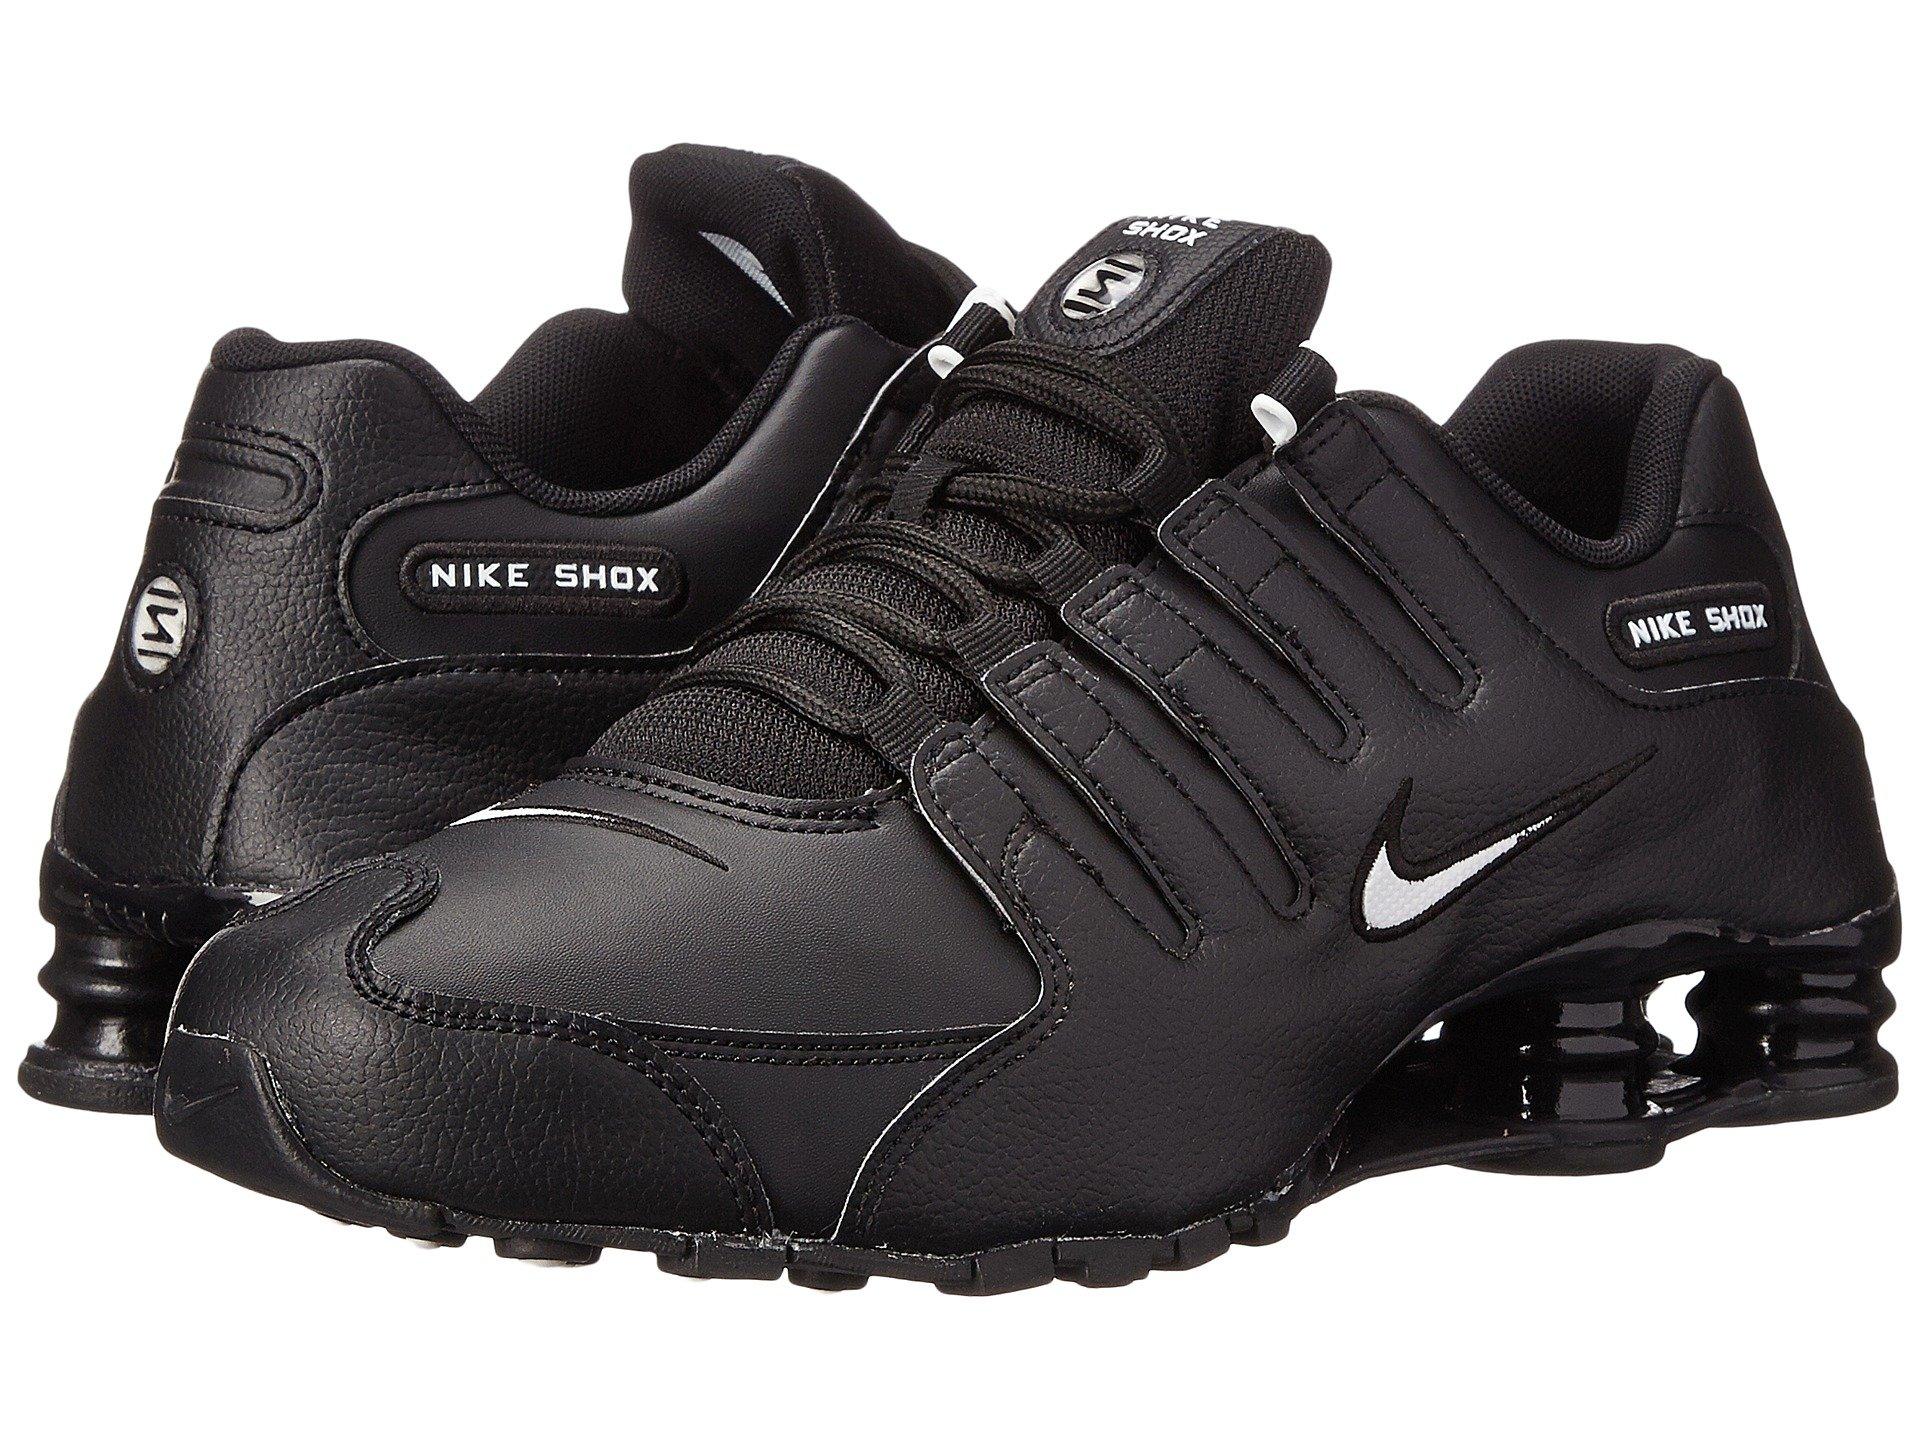 Nike Synthetic Shox Nz Eu in Black,White (Black) for Men - Lyst